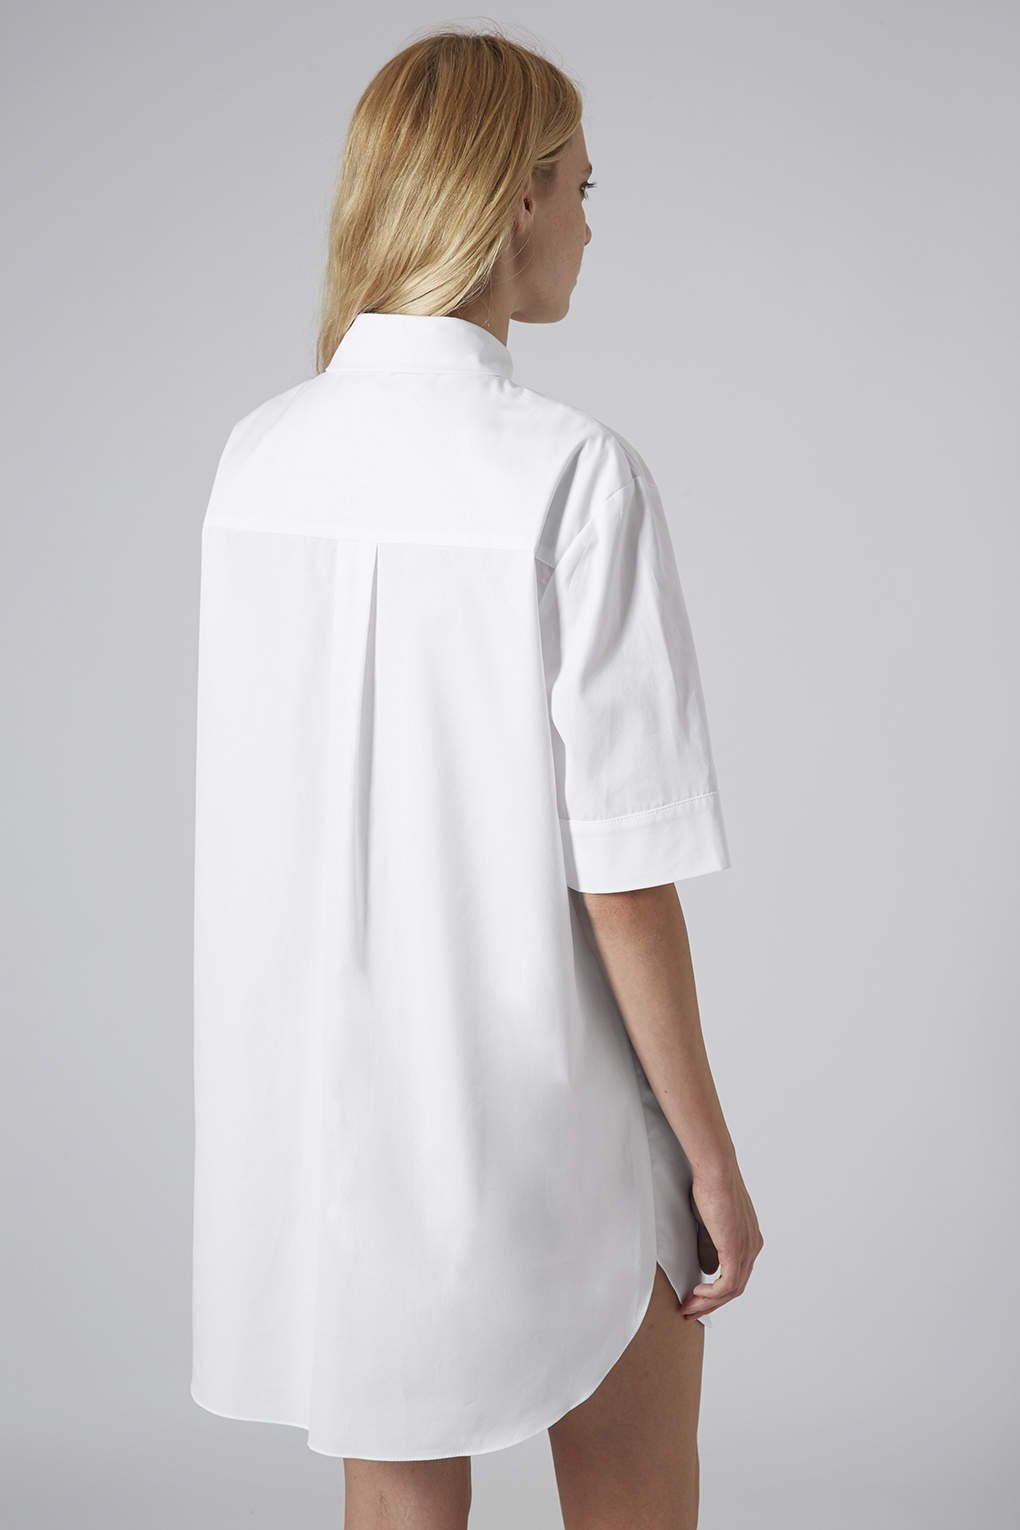 topshop white shirt dress